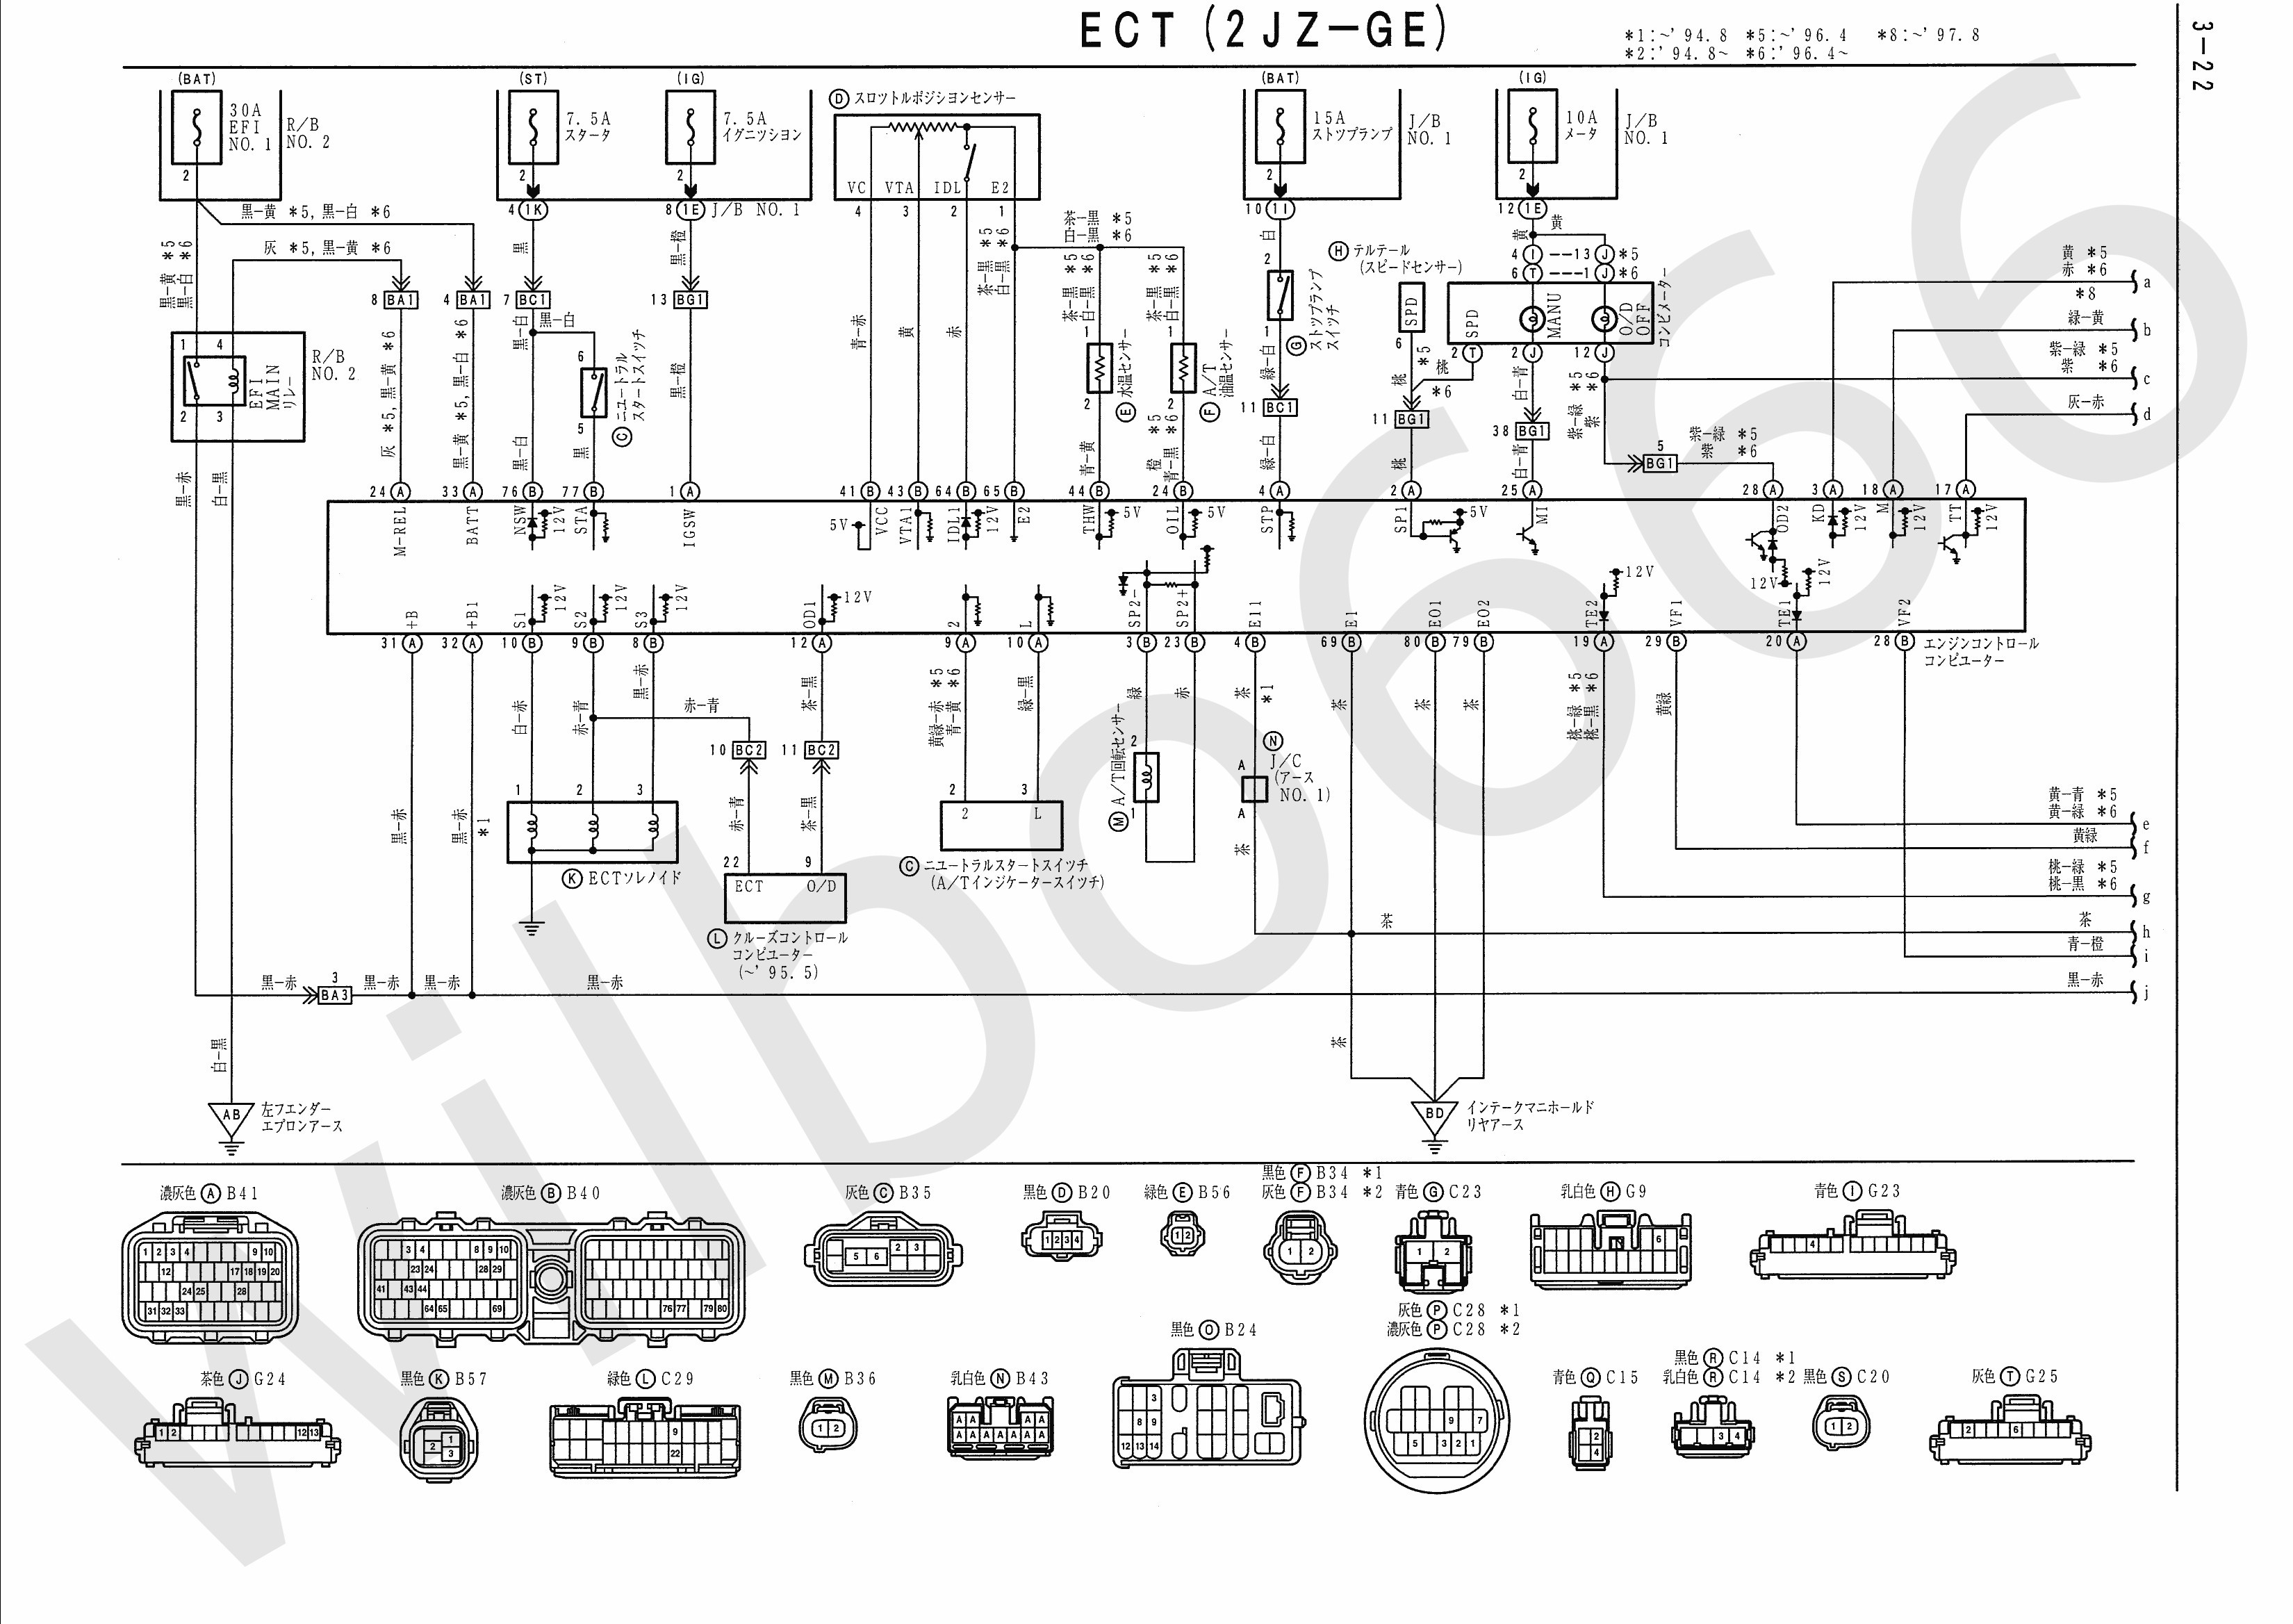 Data Link Connector Wiring Diagram New Wilbo666 2jz Ge Jza80 Supra Engine Wiring